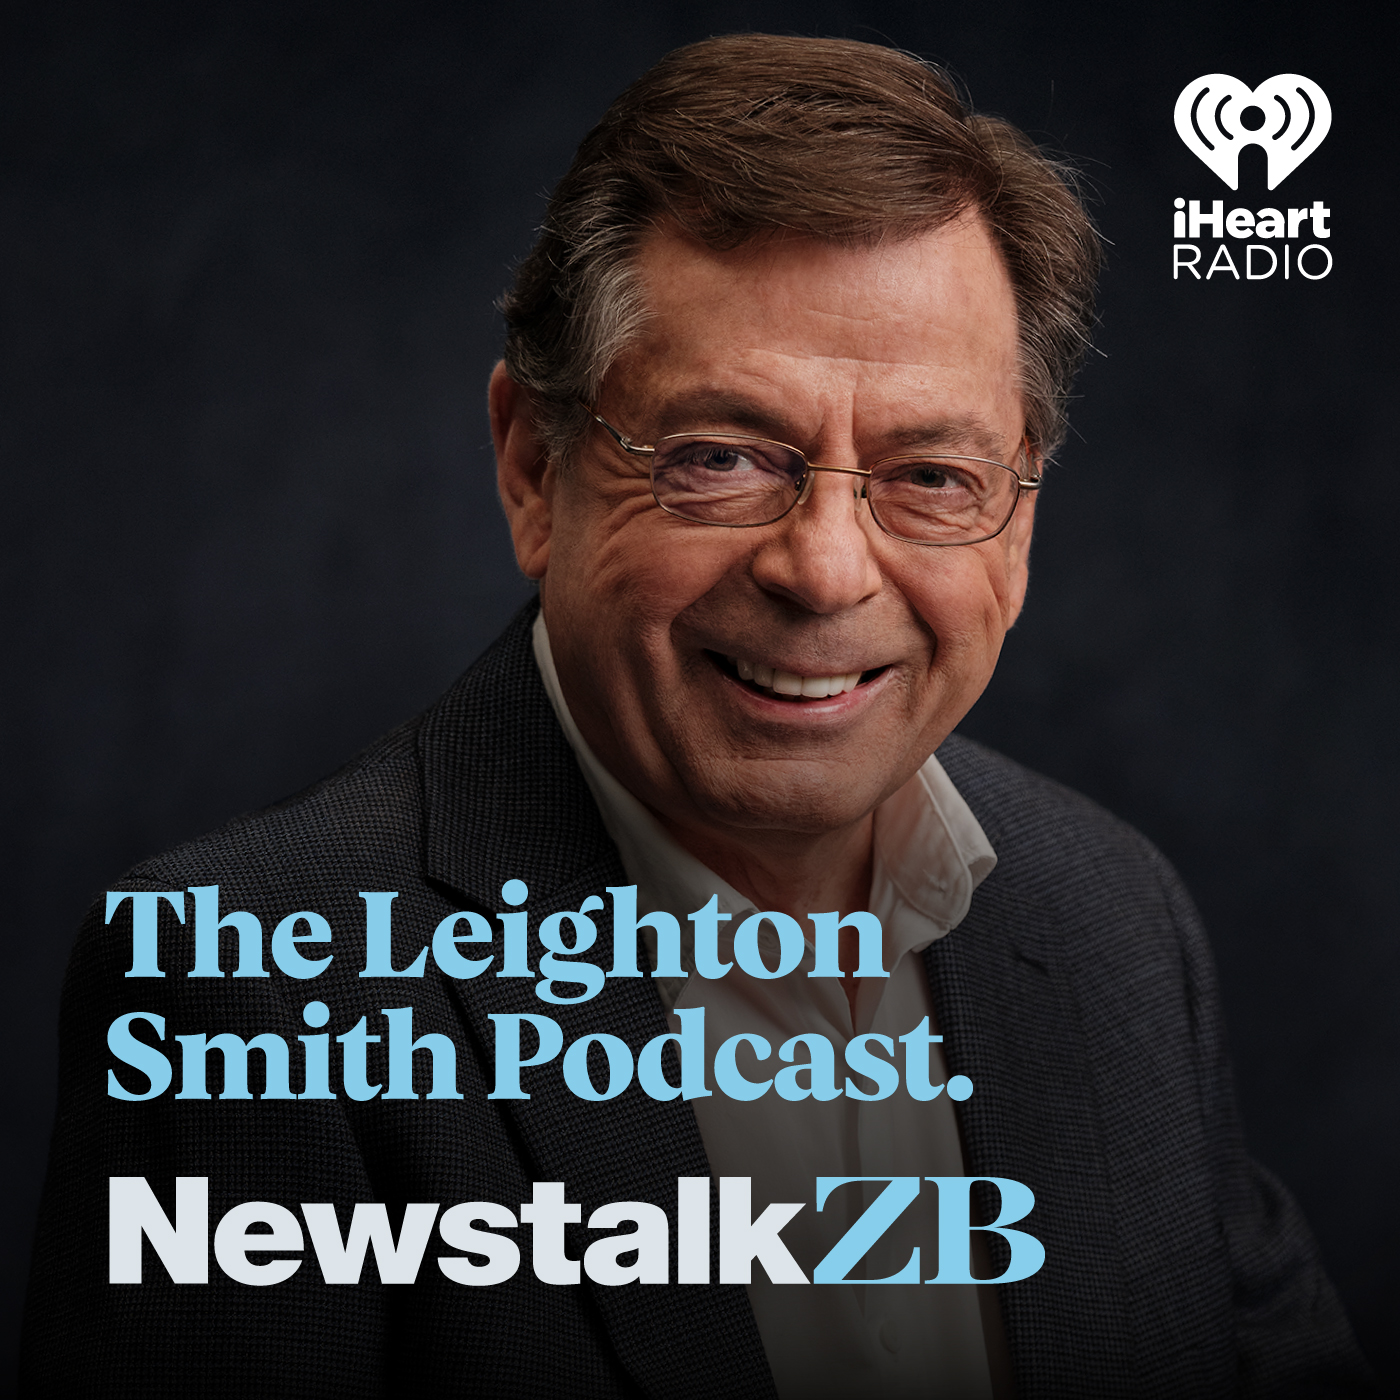 Leighton Smith Podcast - Trailer